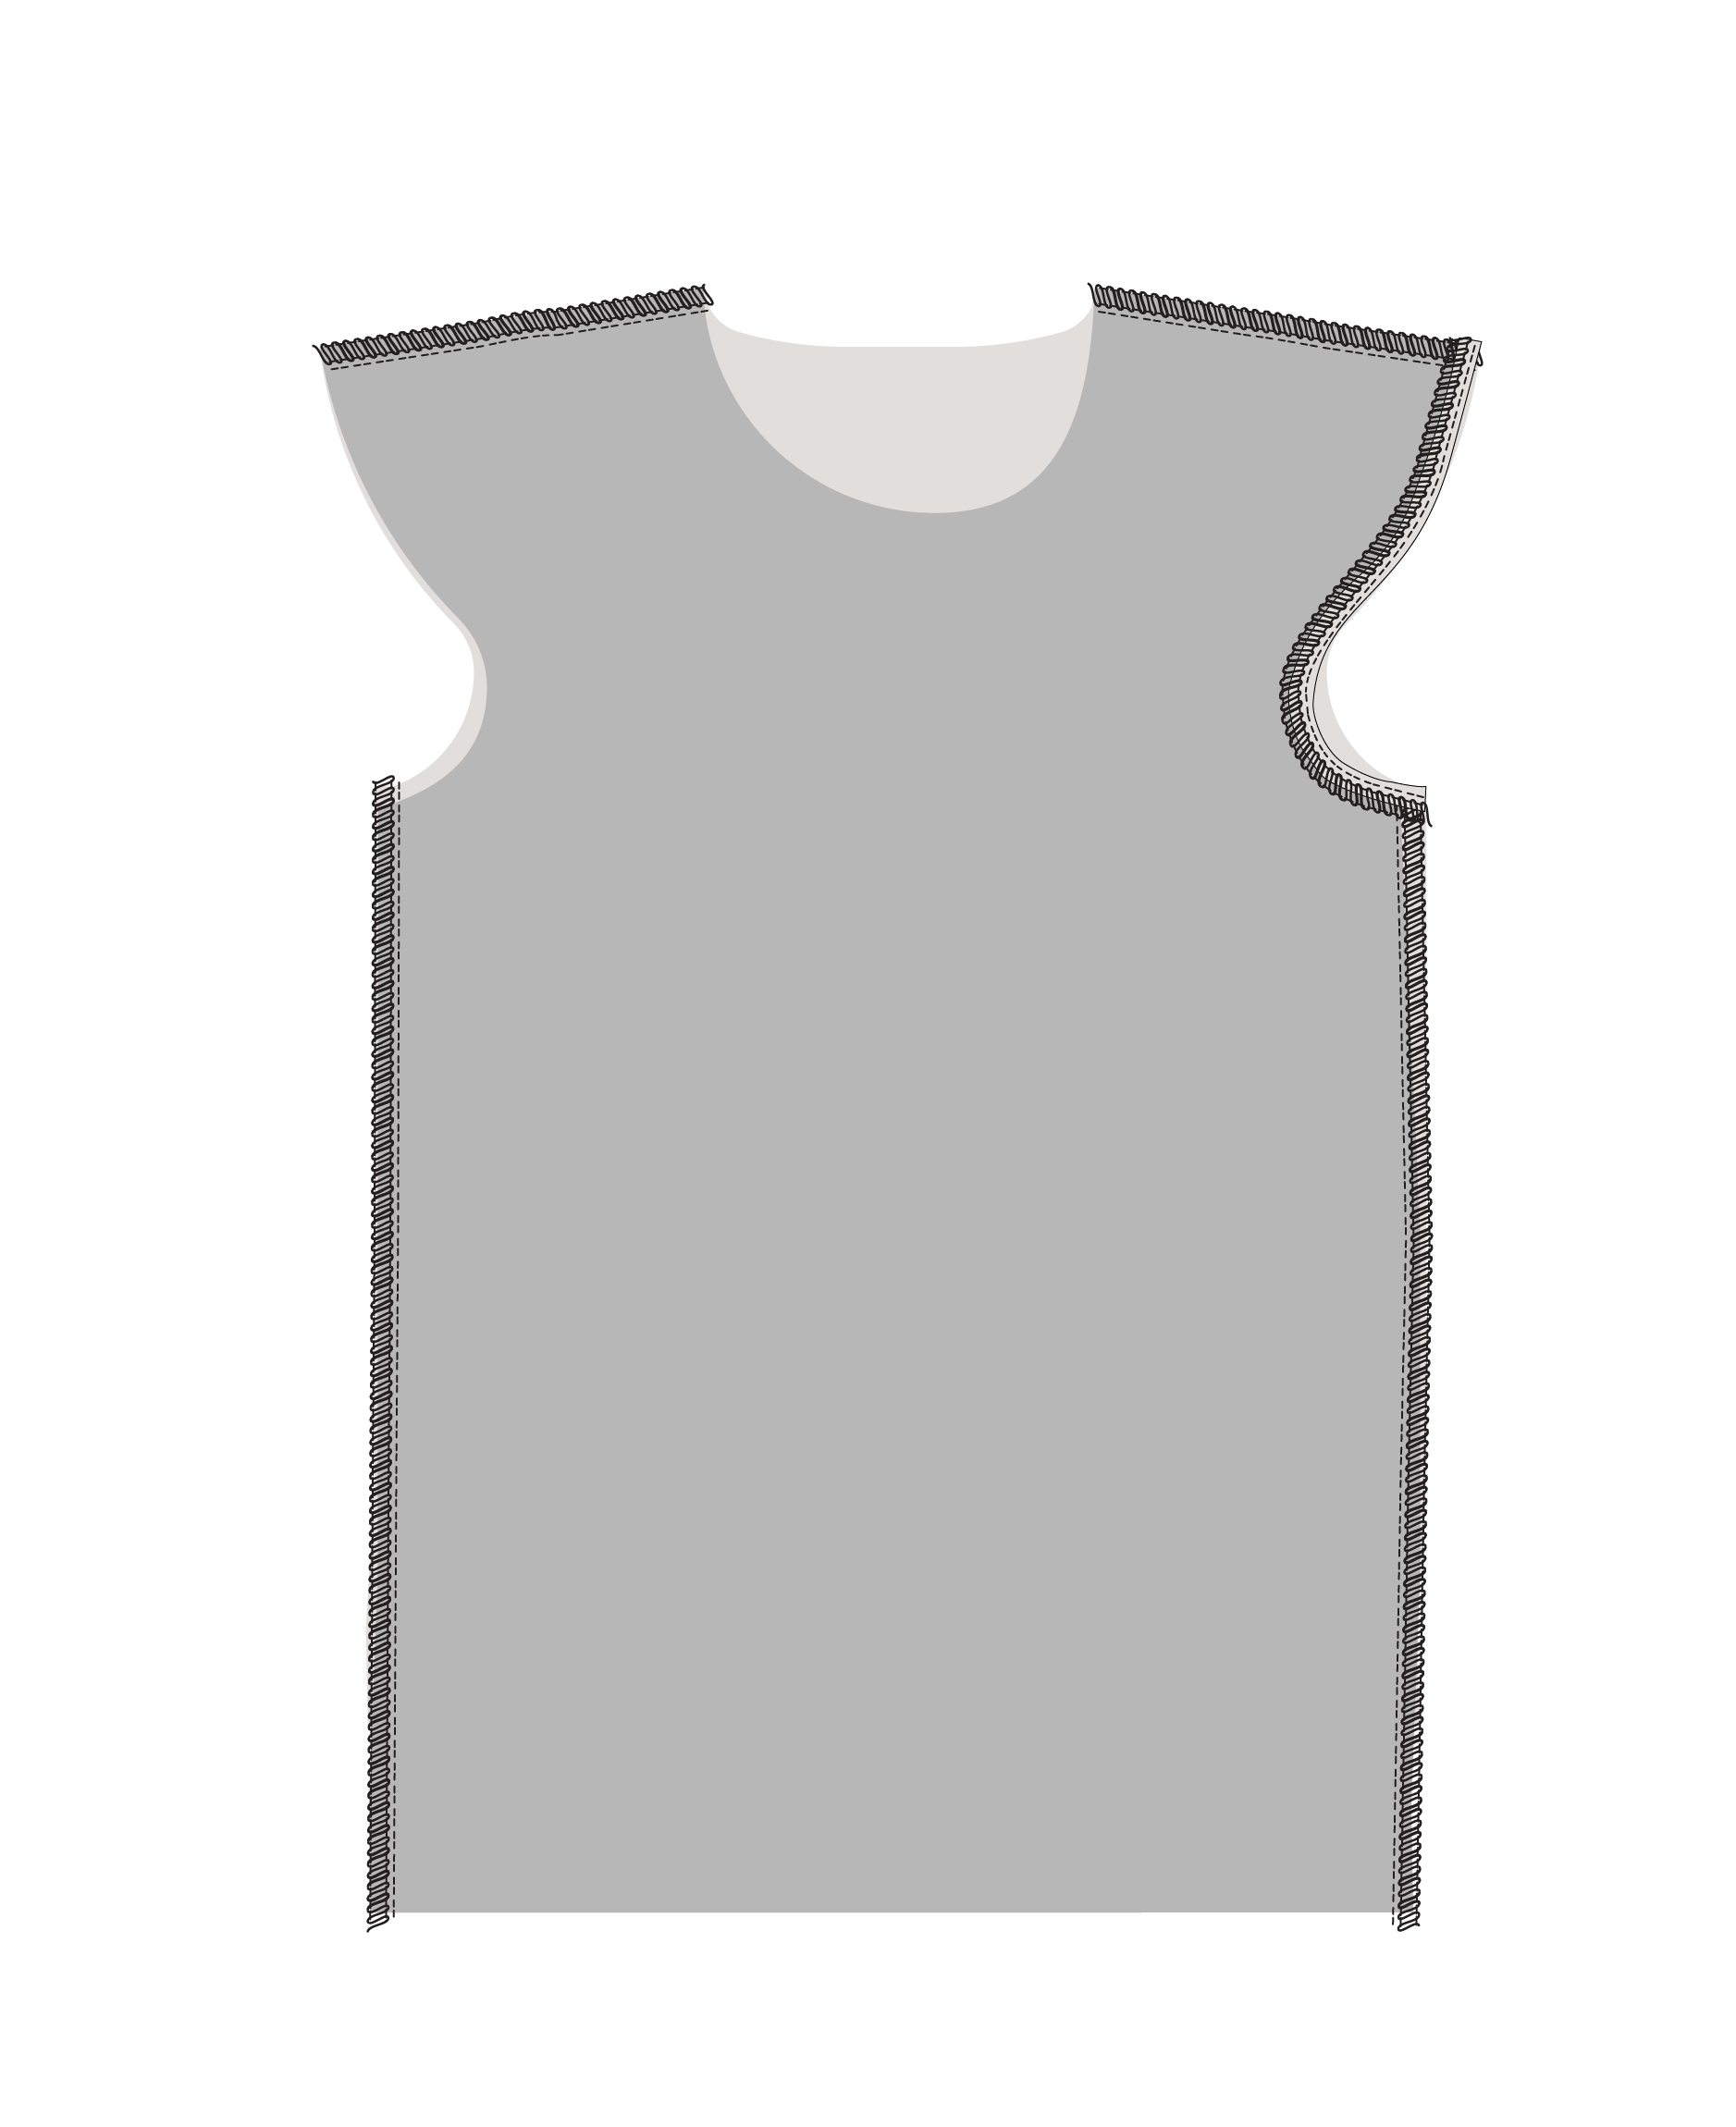 Schulterpolster Shirt: Seitennaht schließen